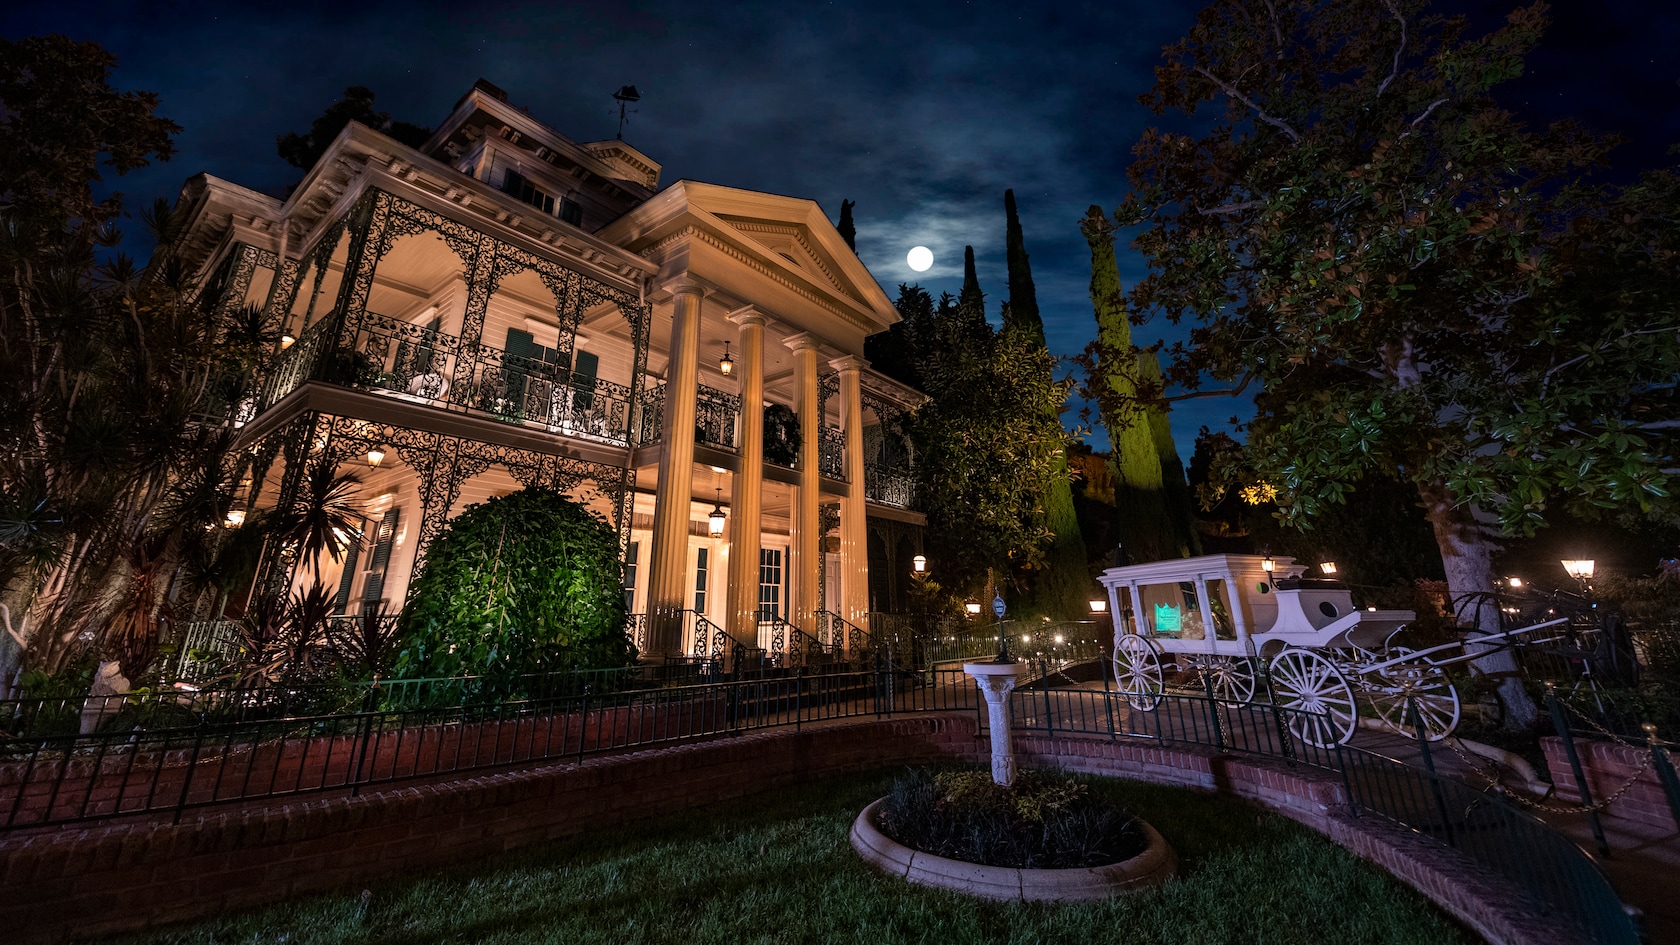 Family Shuts Down Haunted Mansion at Disney Park •